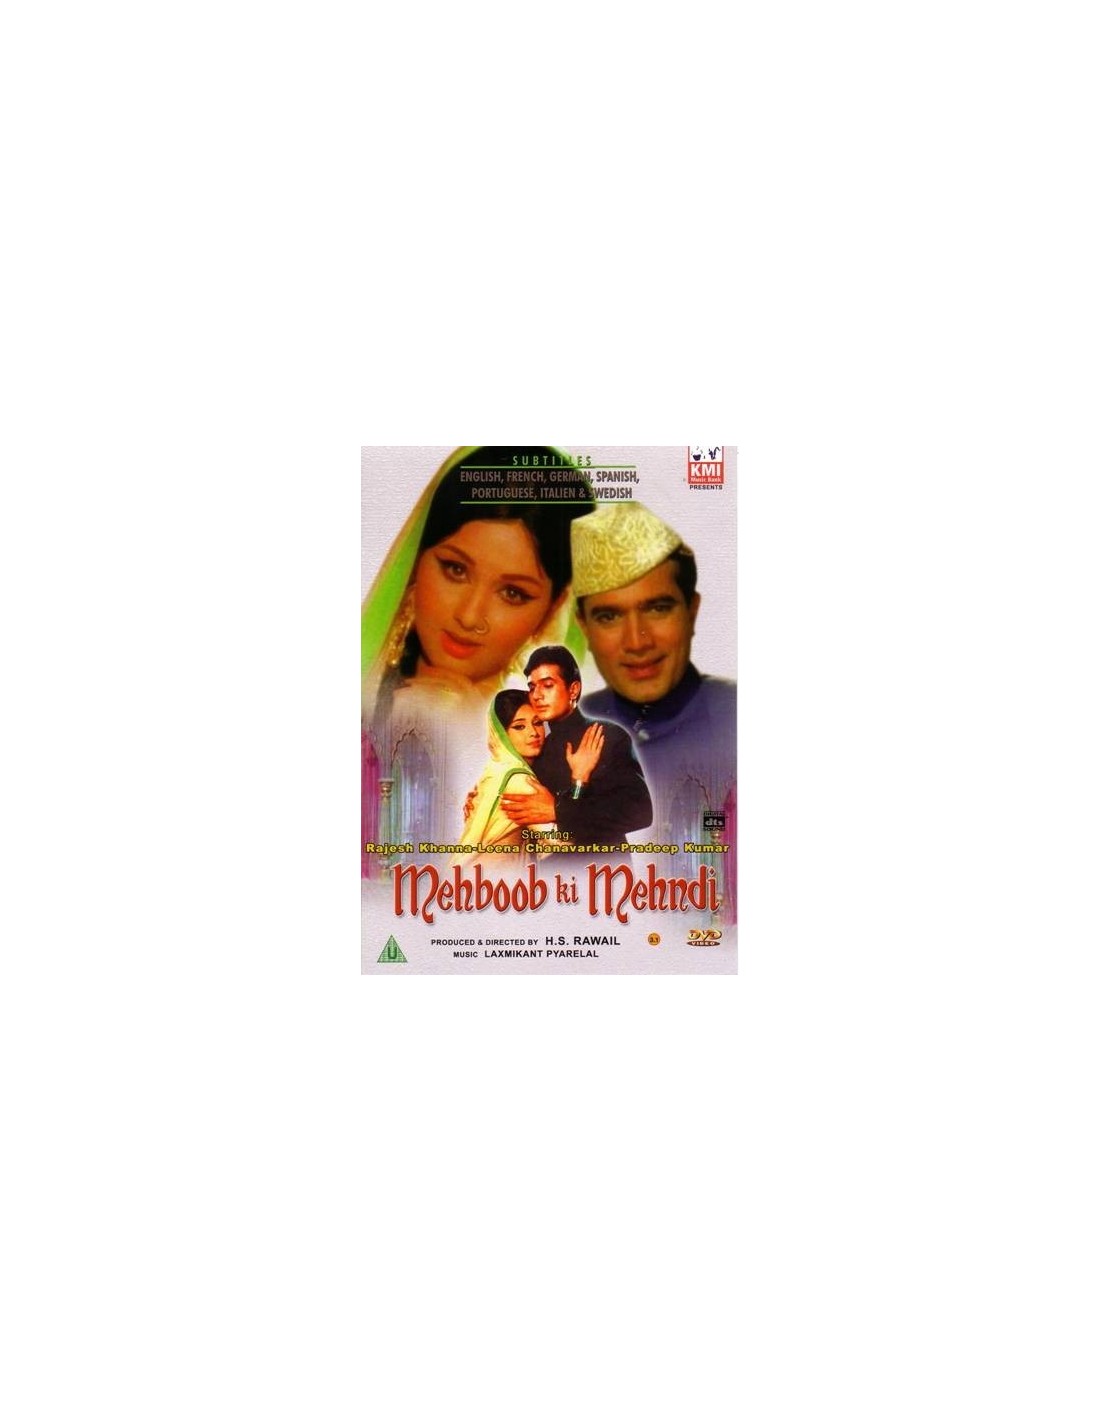 Mehboob Ki Mehndi' cast: Know who starred in this 1971 romantic film